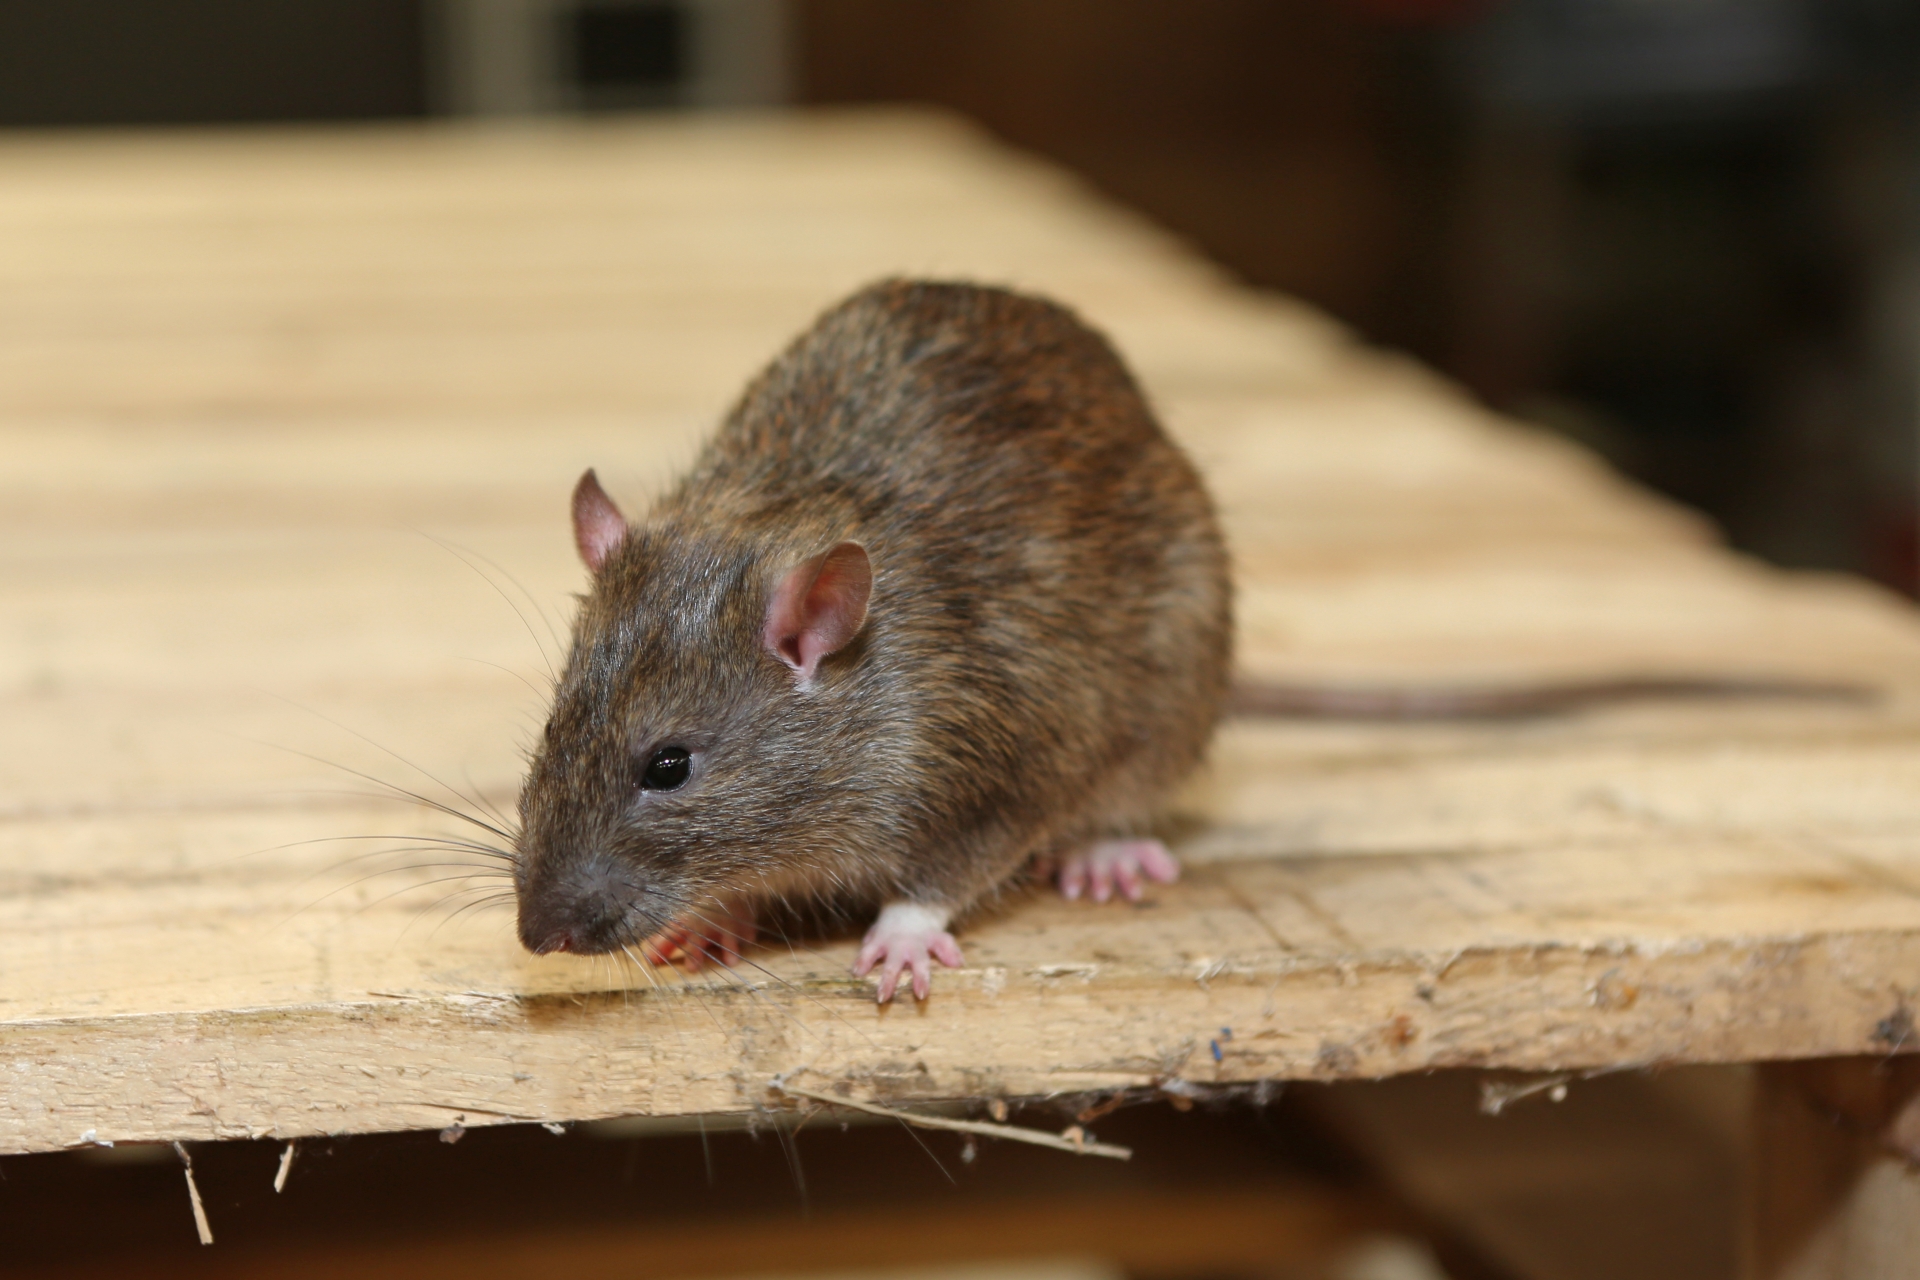 Rat extermination, Pest Control in Barnehurst, DA7. Call Now 020 8166 9746